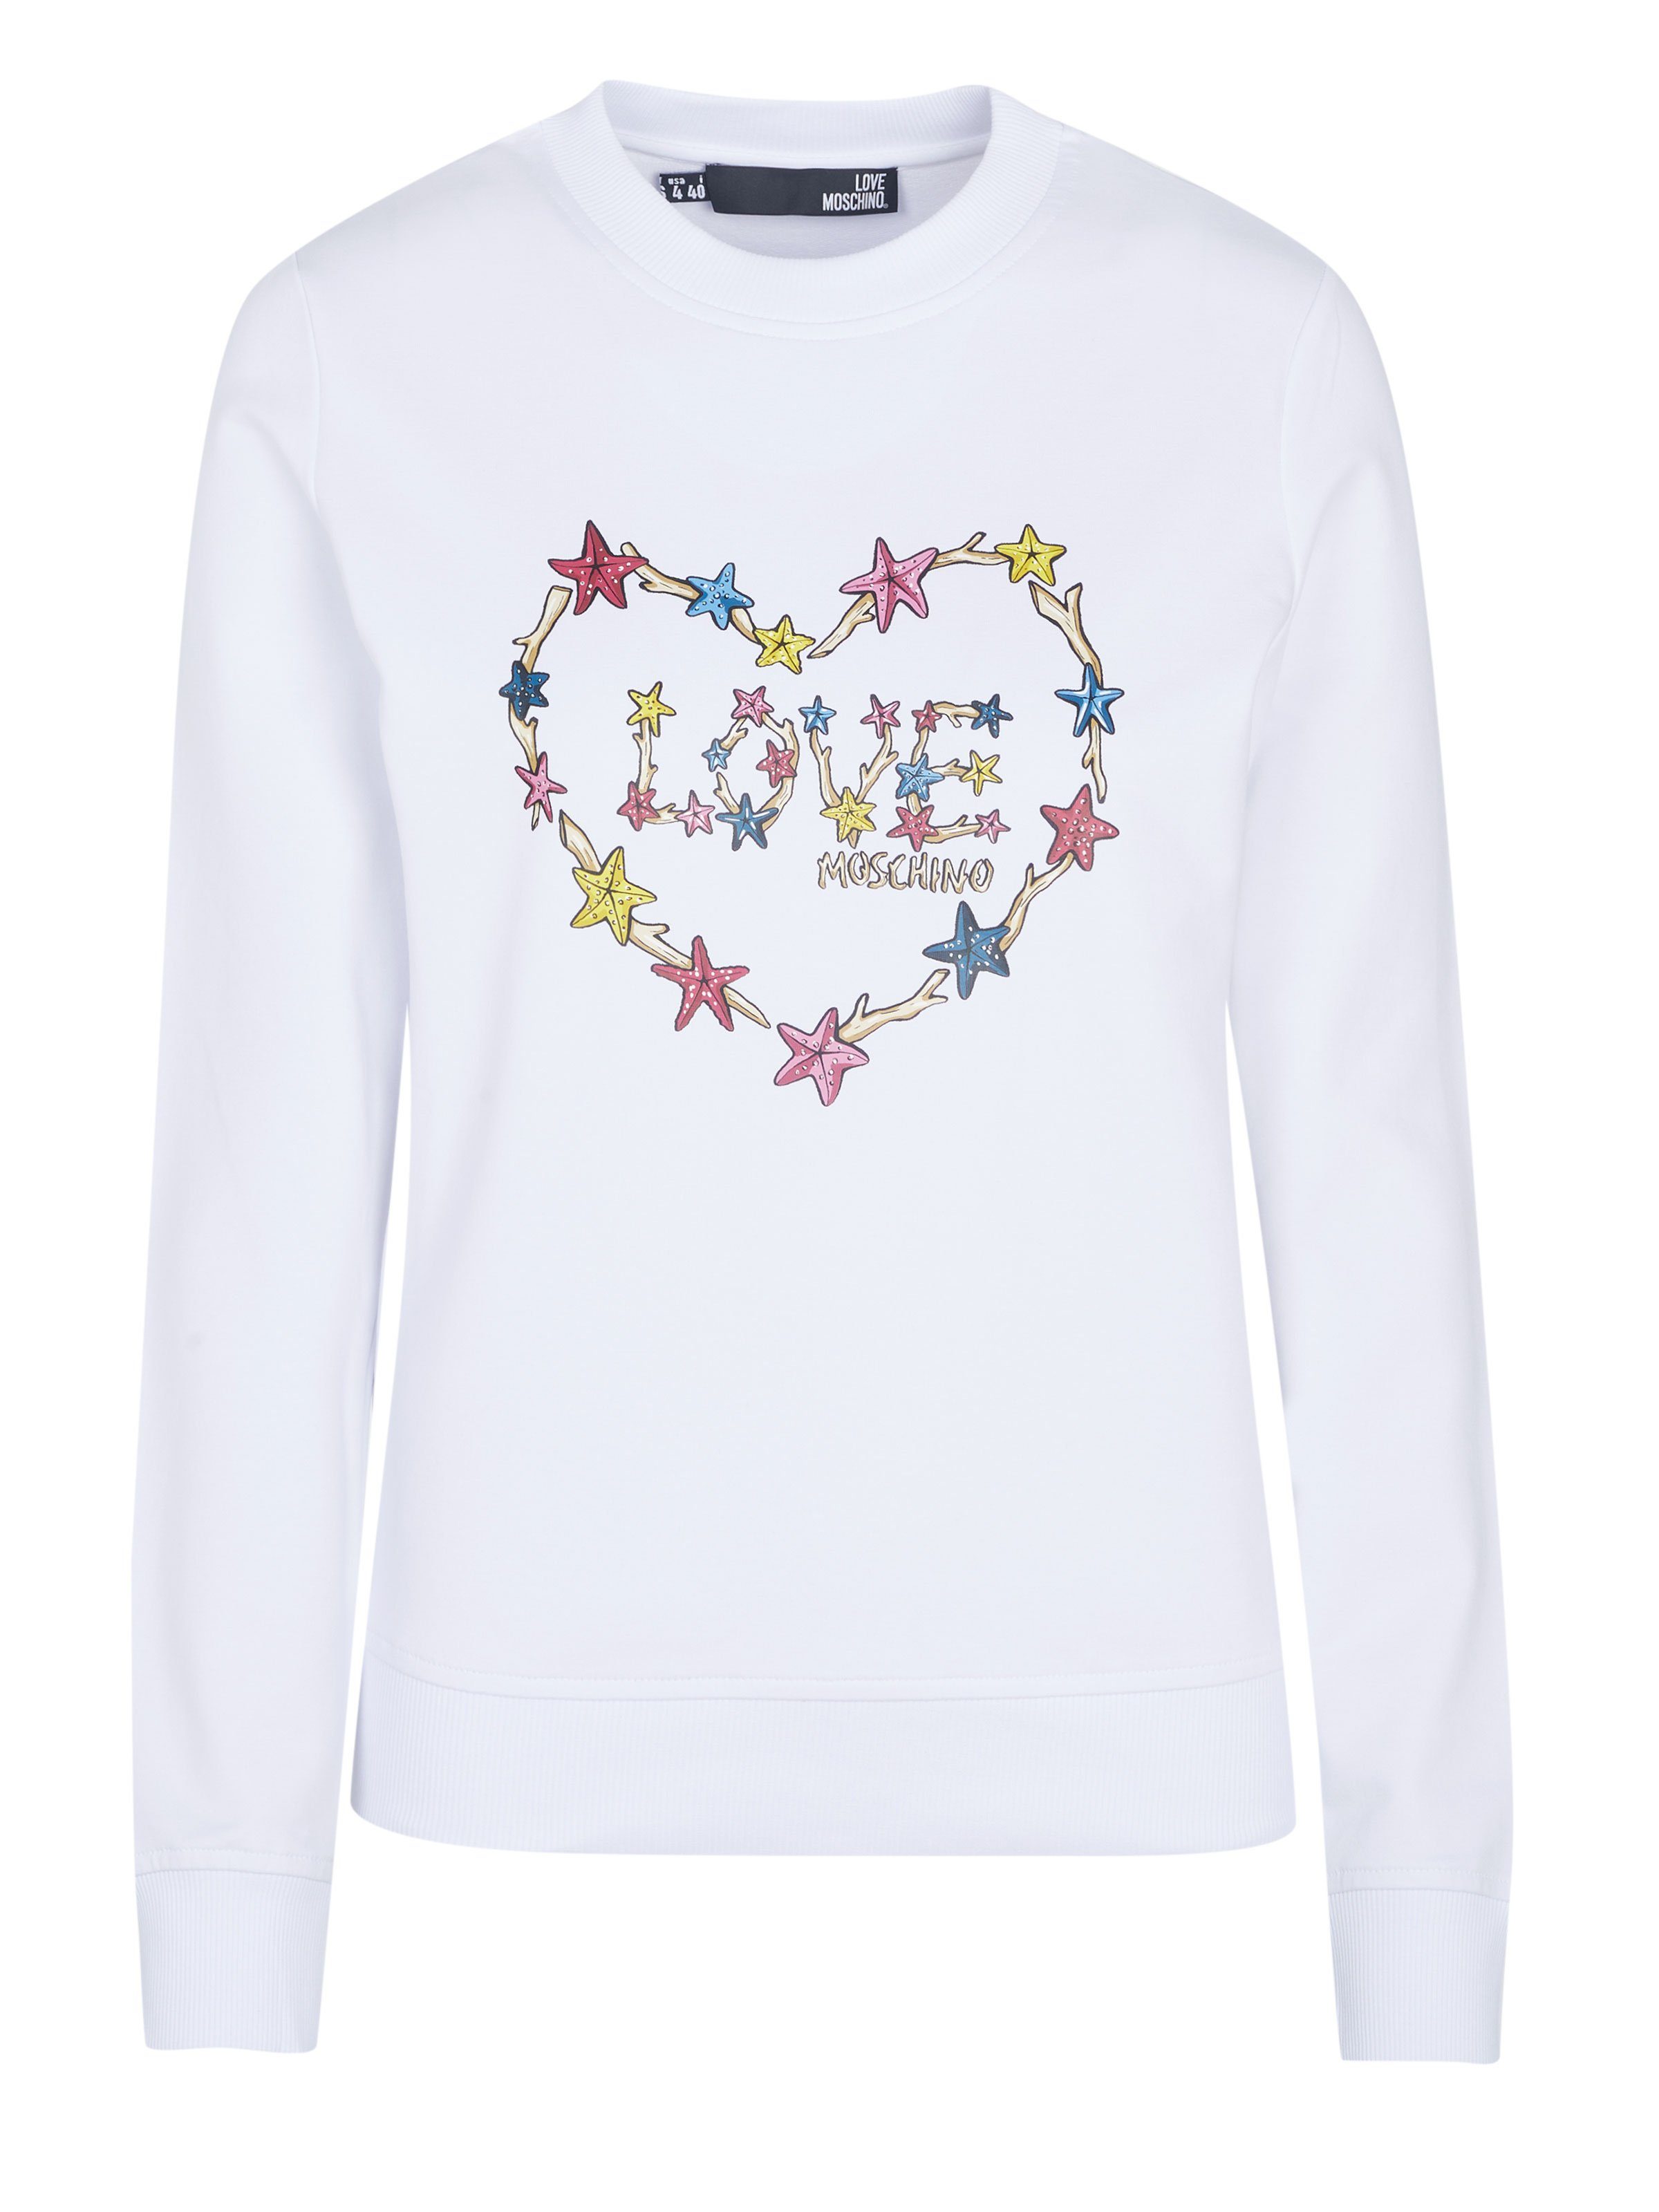 LOVE MOSCHINO Sweater Love Moschino Pullover